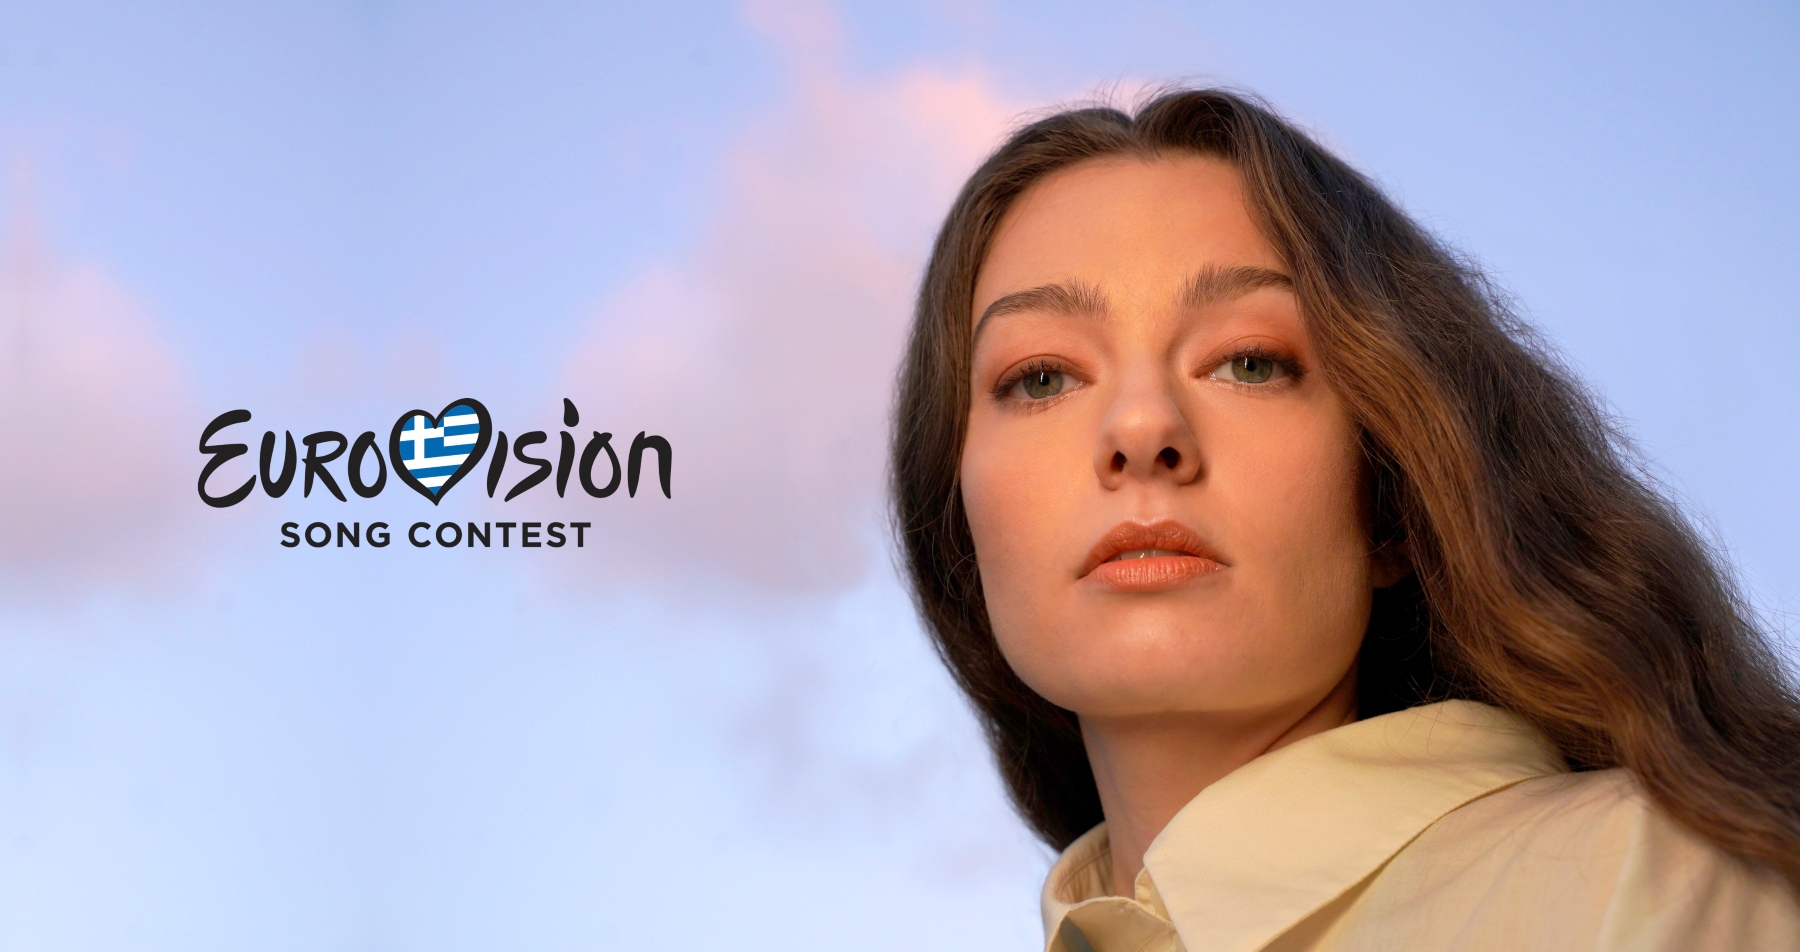 Eurovision: Αυτό είναι το επίσημο video clip του Die together της Αμάντας Γεωργιάδη που θα στείλουμε στο Τορίνο